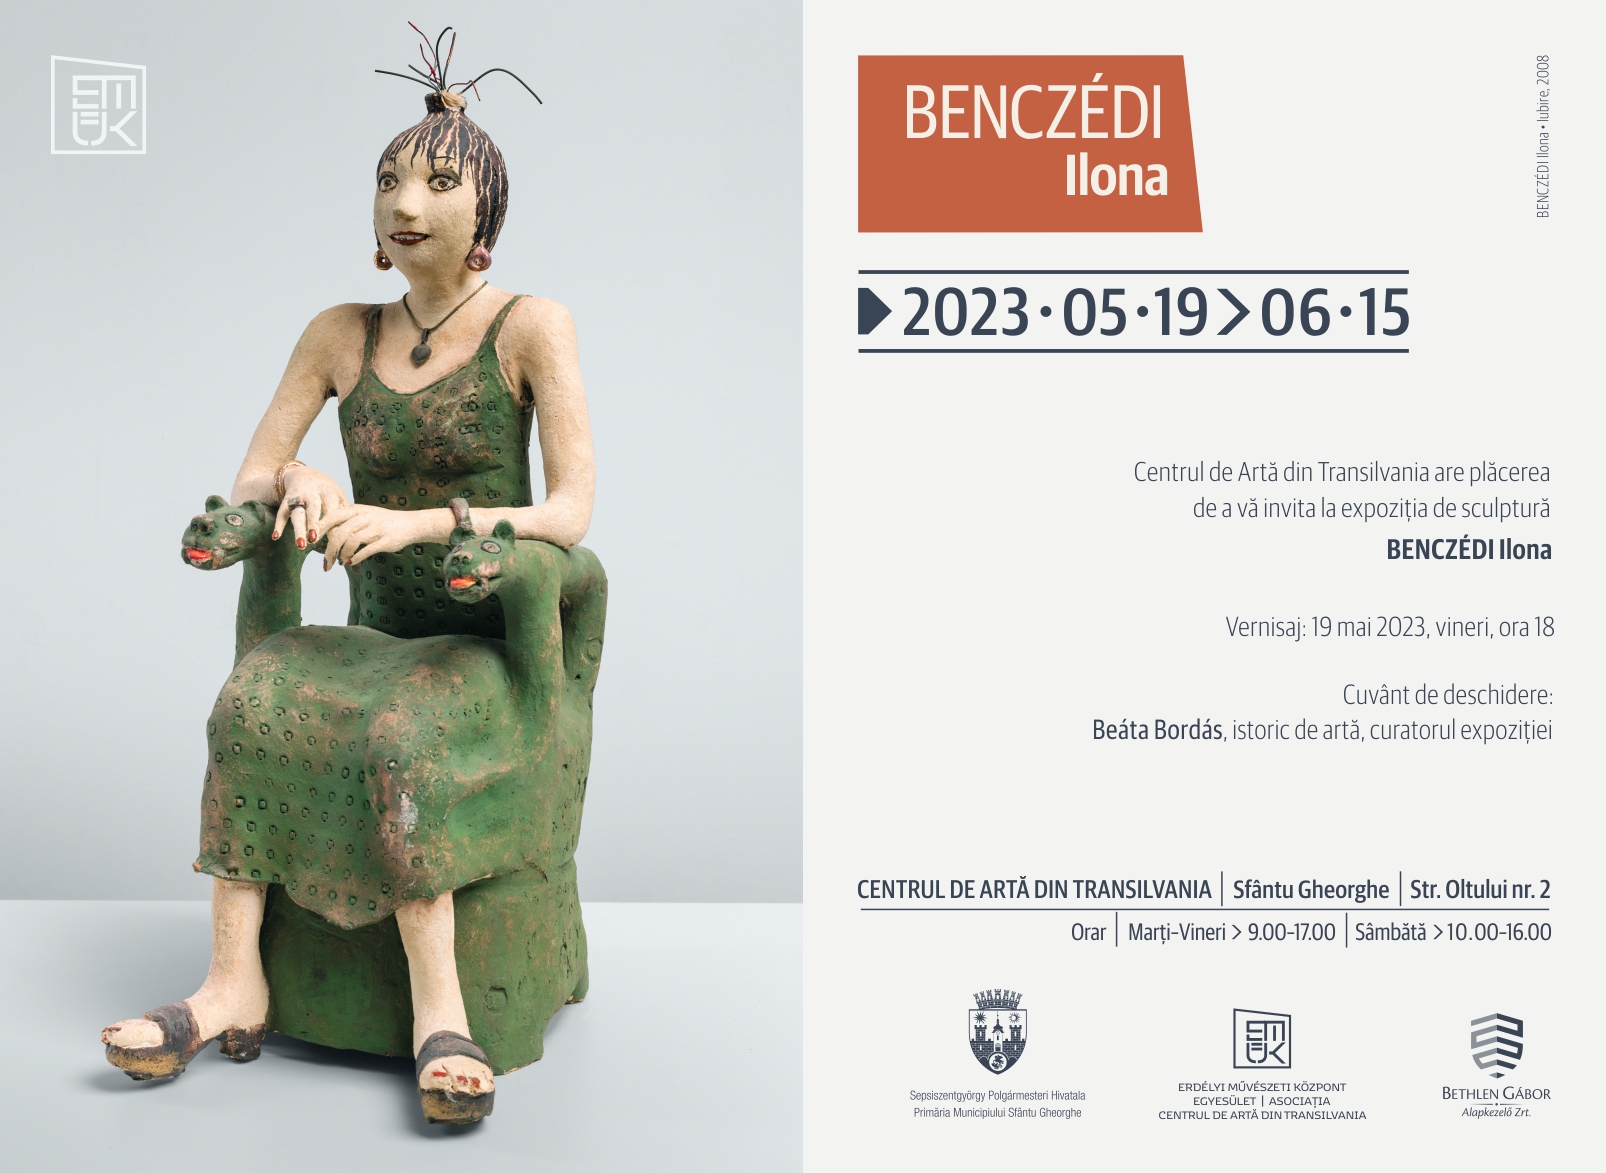 Exhibition of sculpture BENCZÉDI Ilona